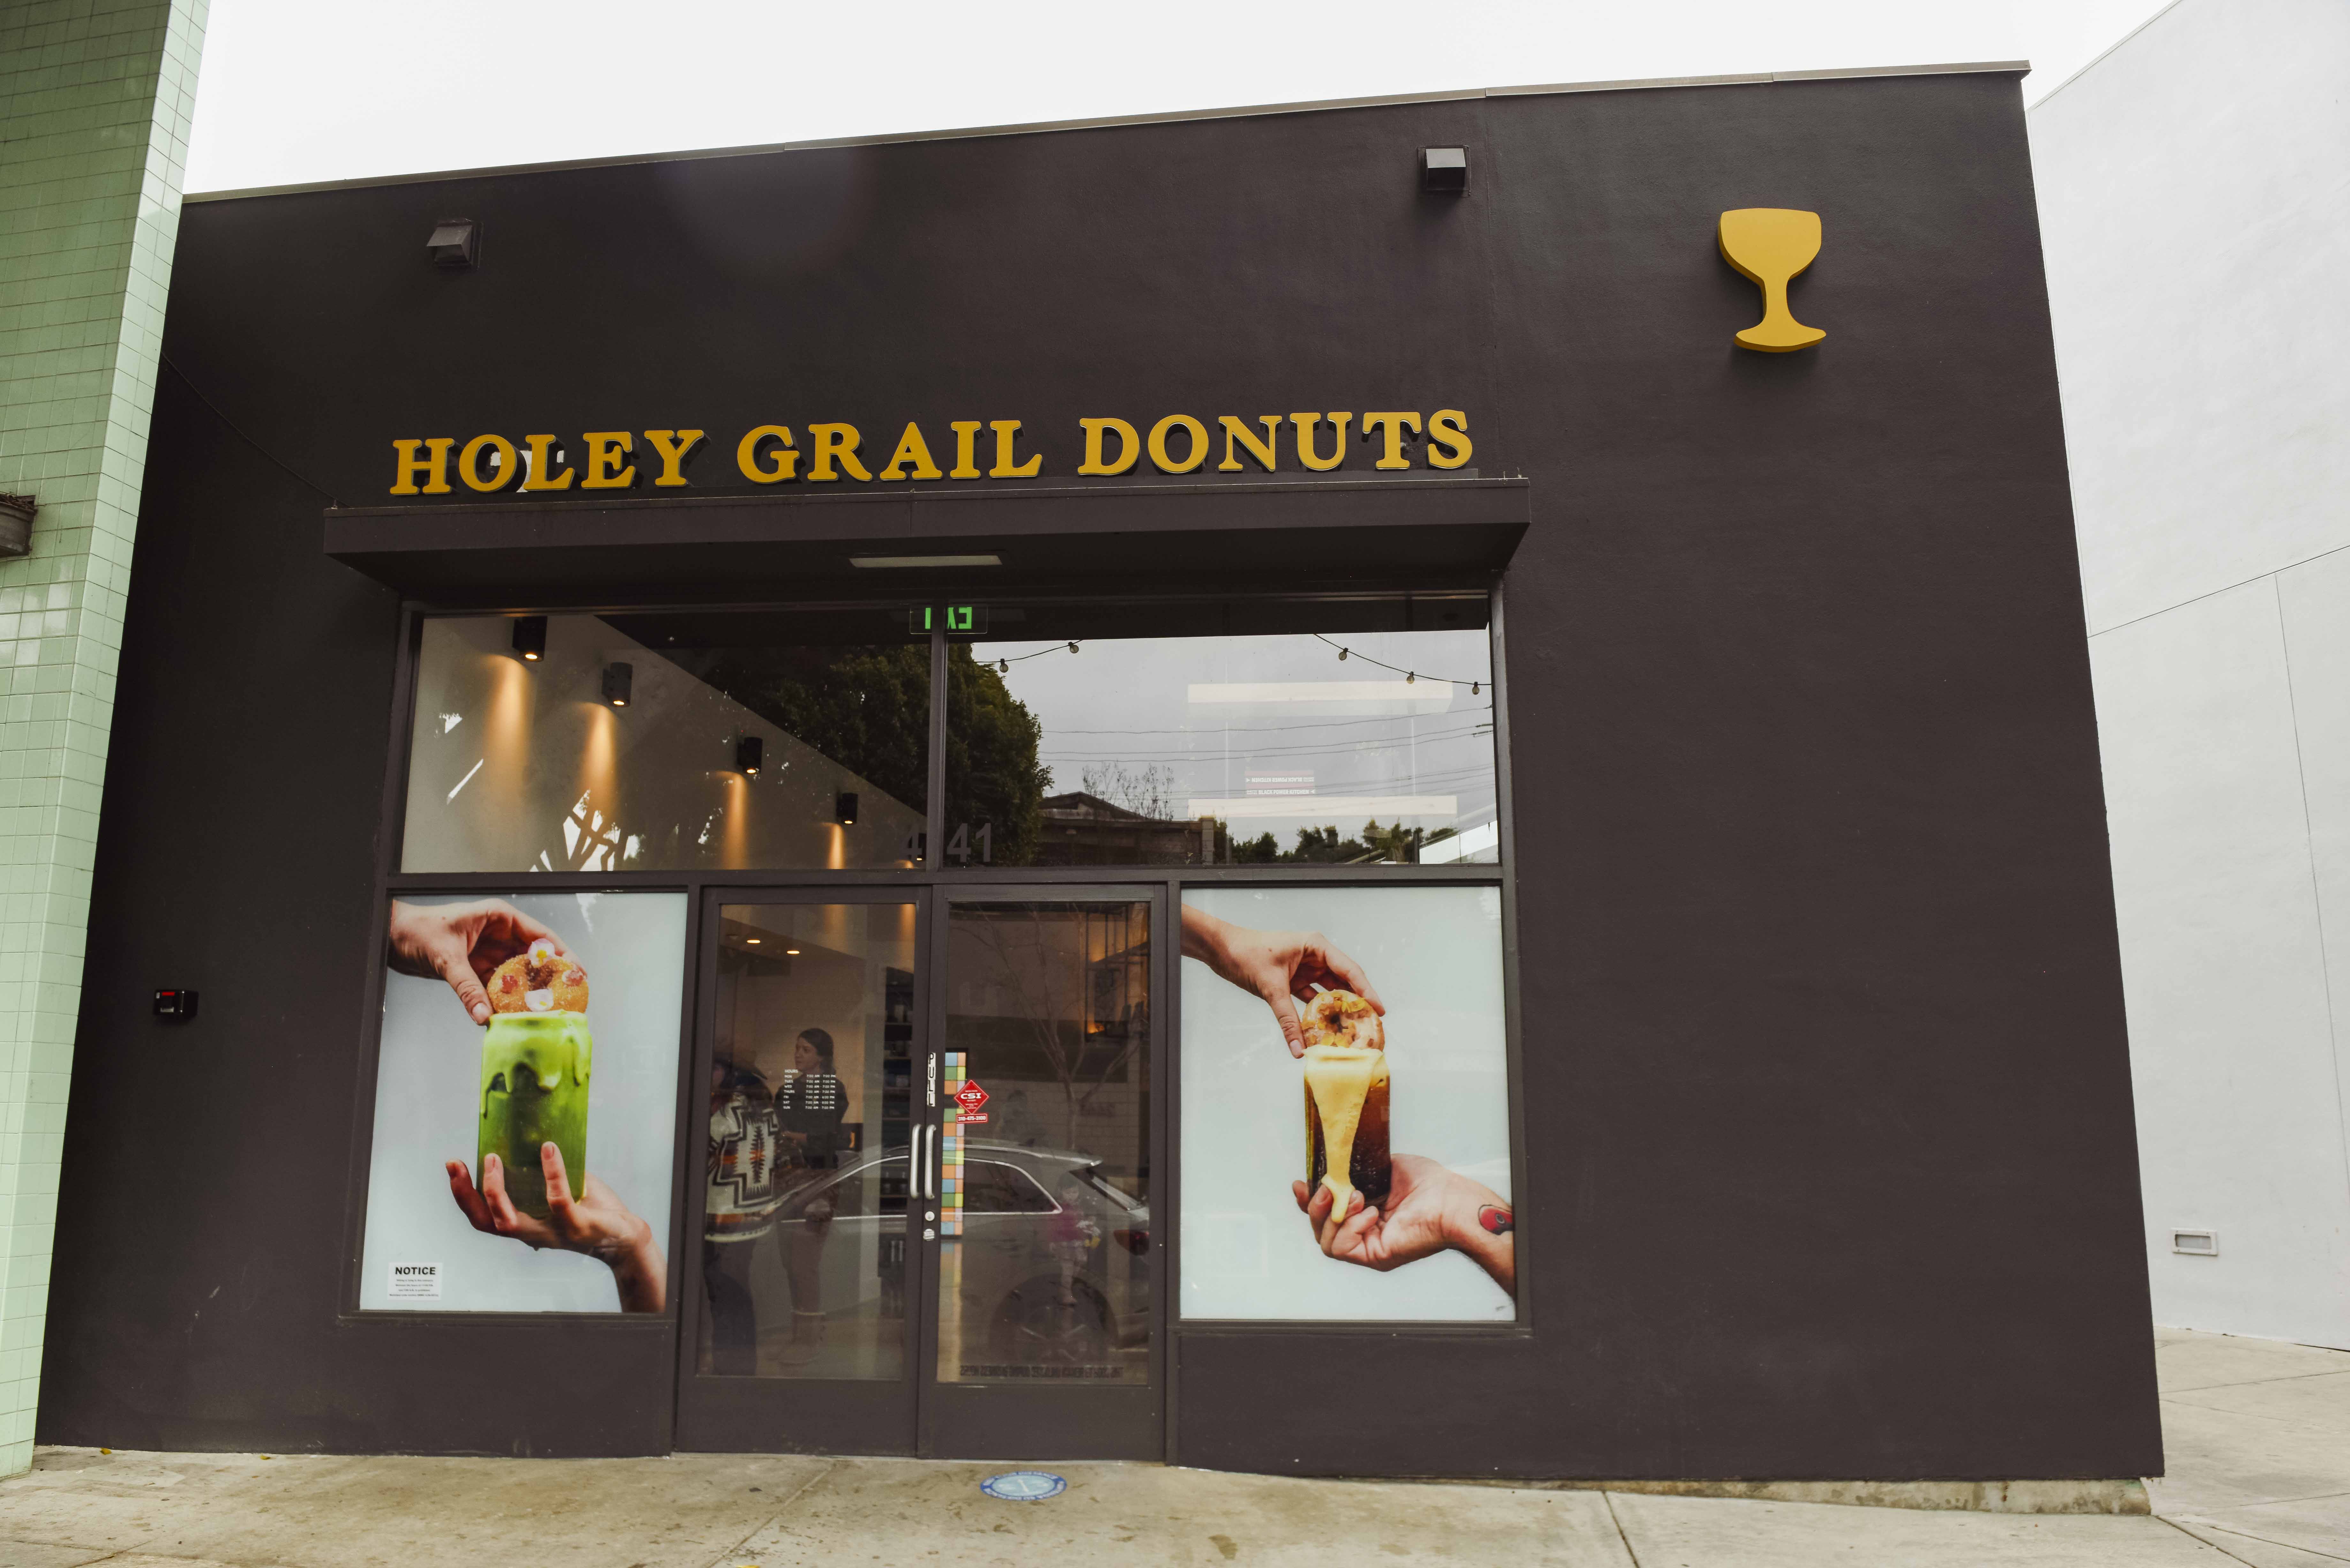 Holey Grail doughnut shop in Santa Monica.